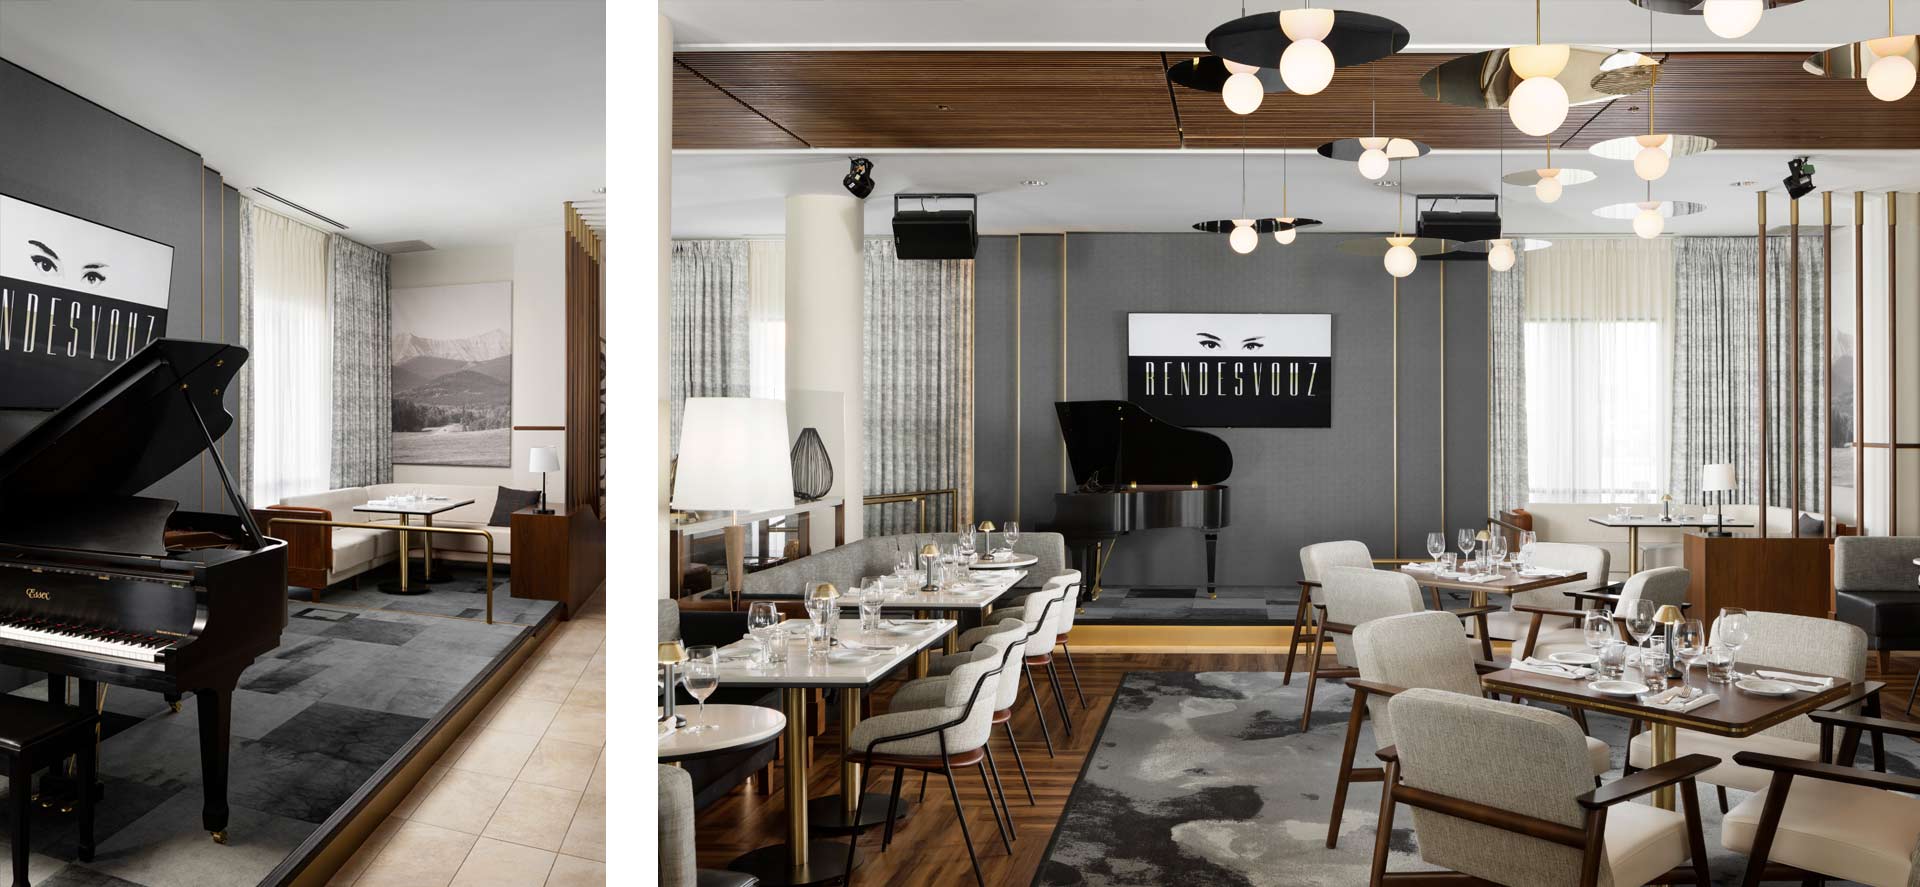 Rendesvouz Restaurant | Calgary Hospitality Architectural and Interior Design